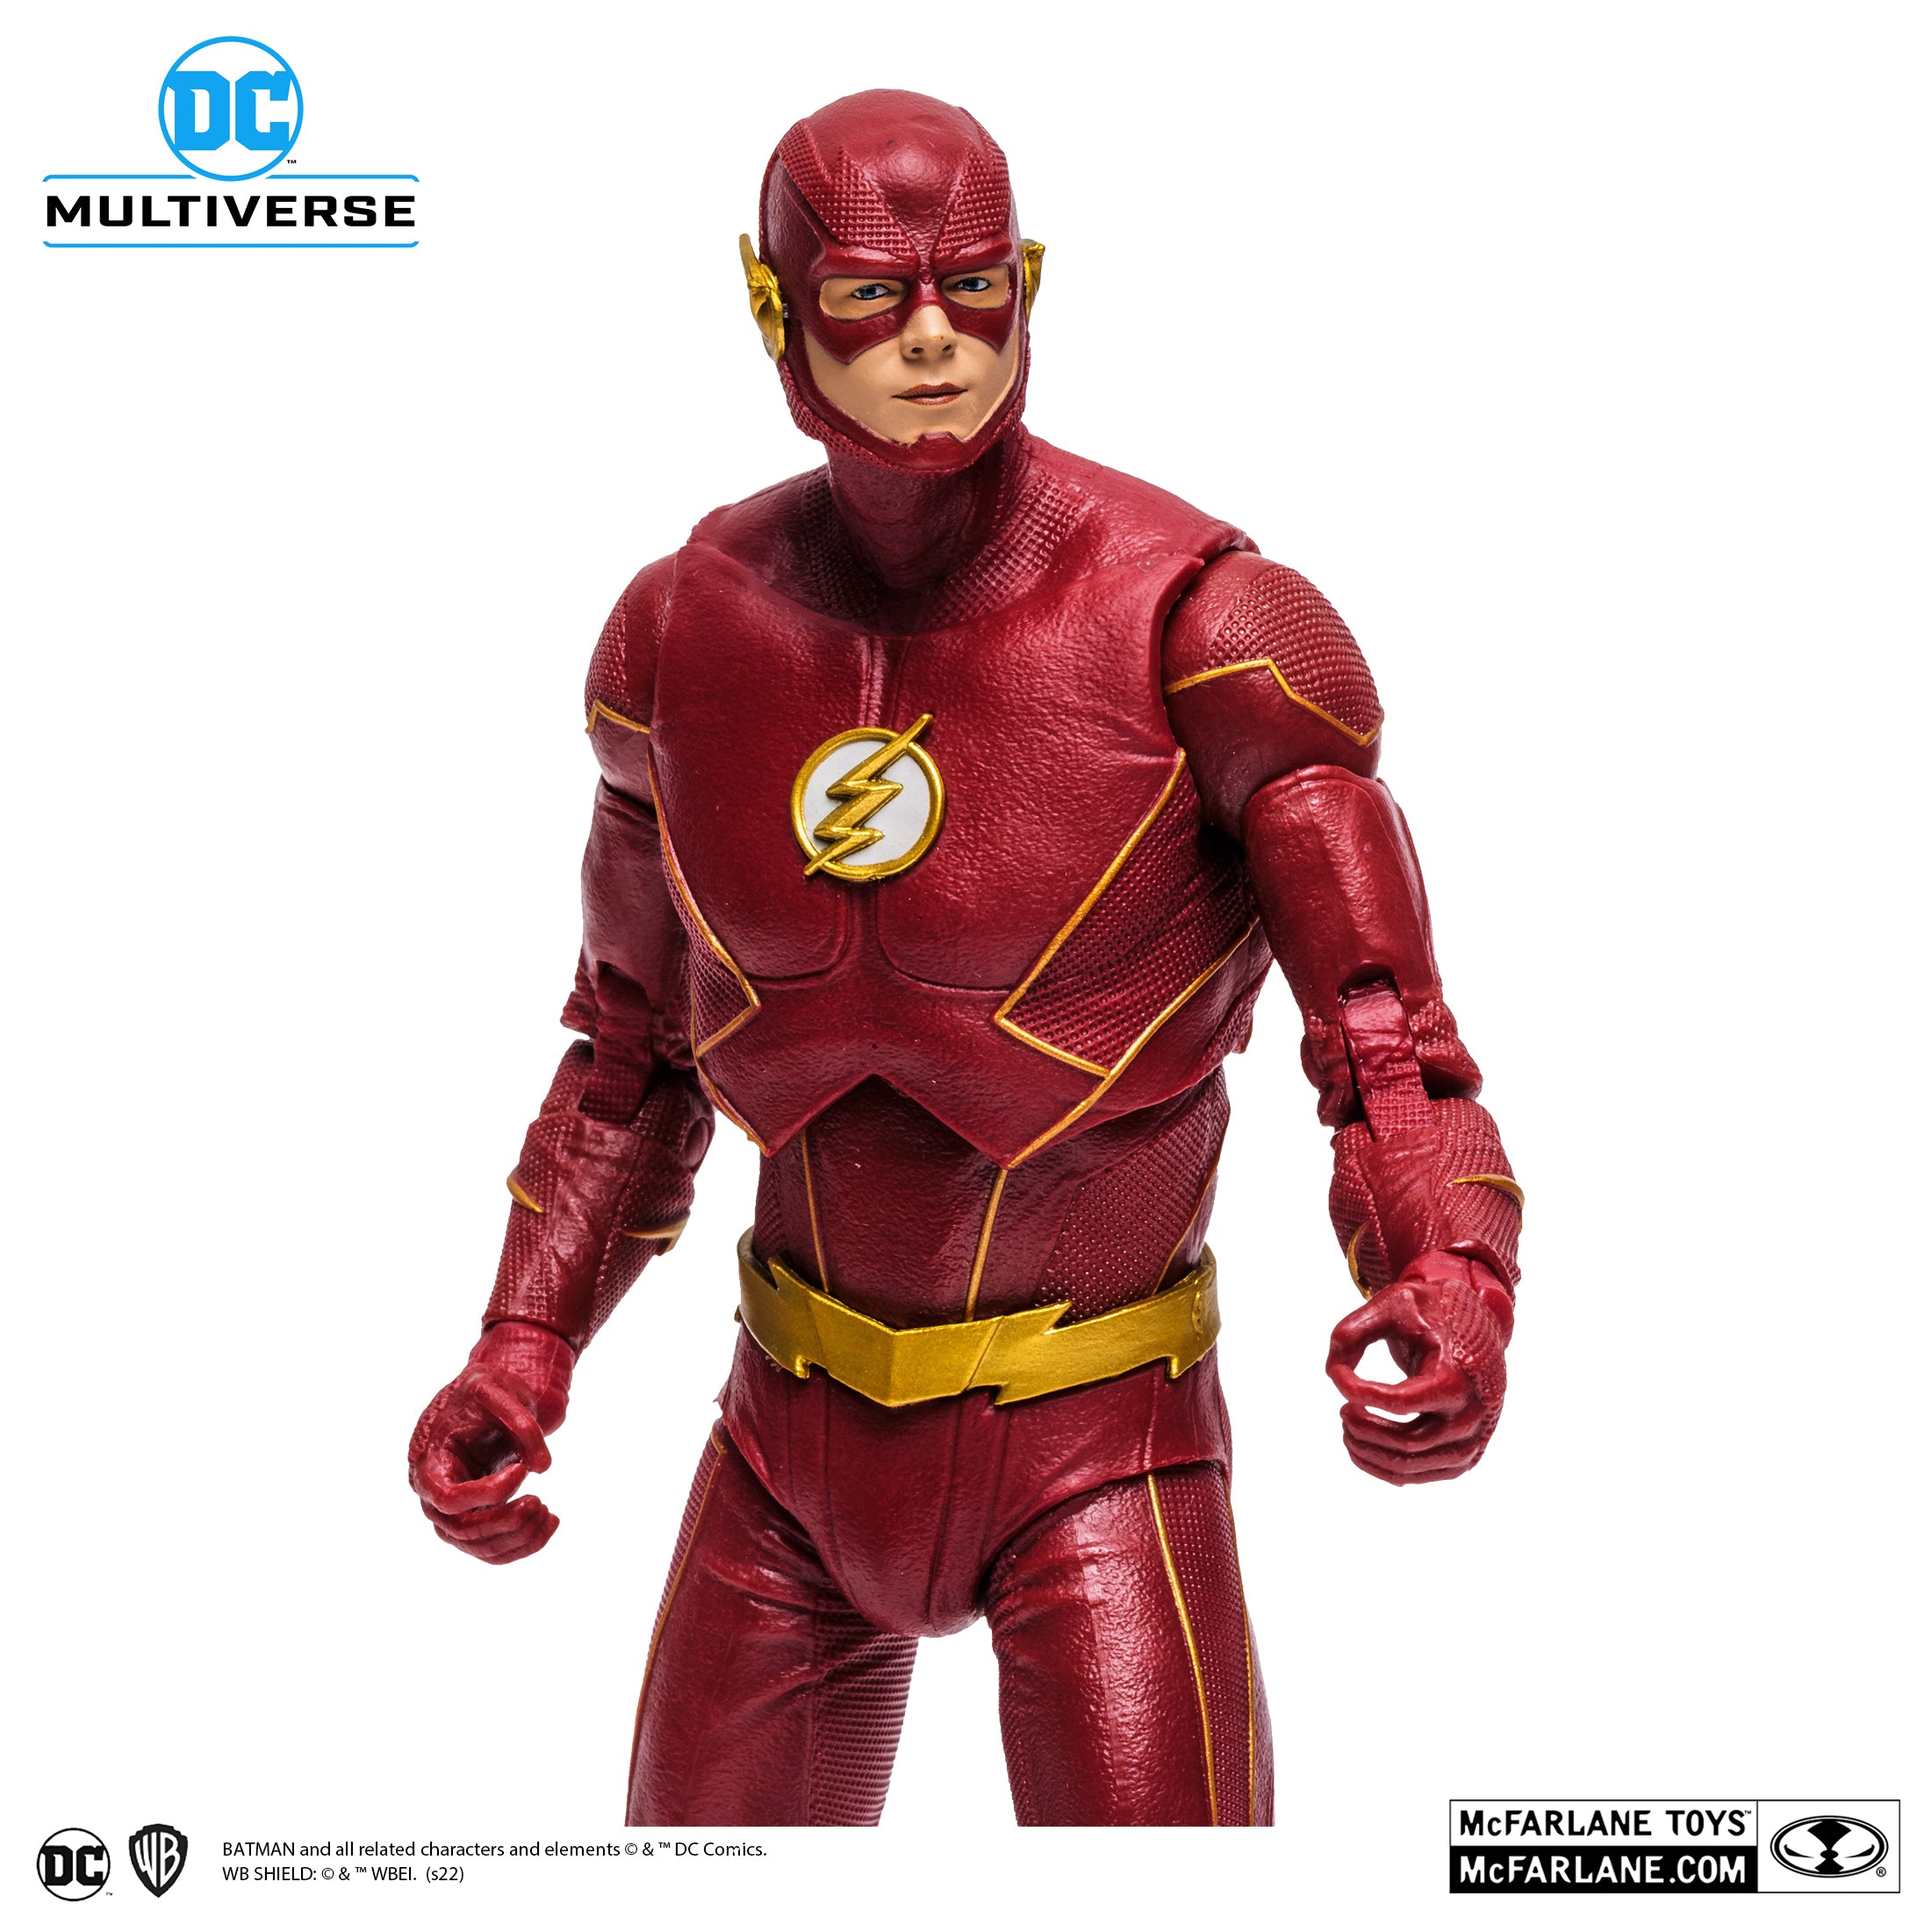 DC Multiverse - McFarlane Toys - The Flash